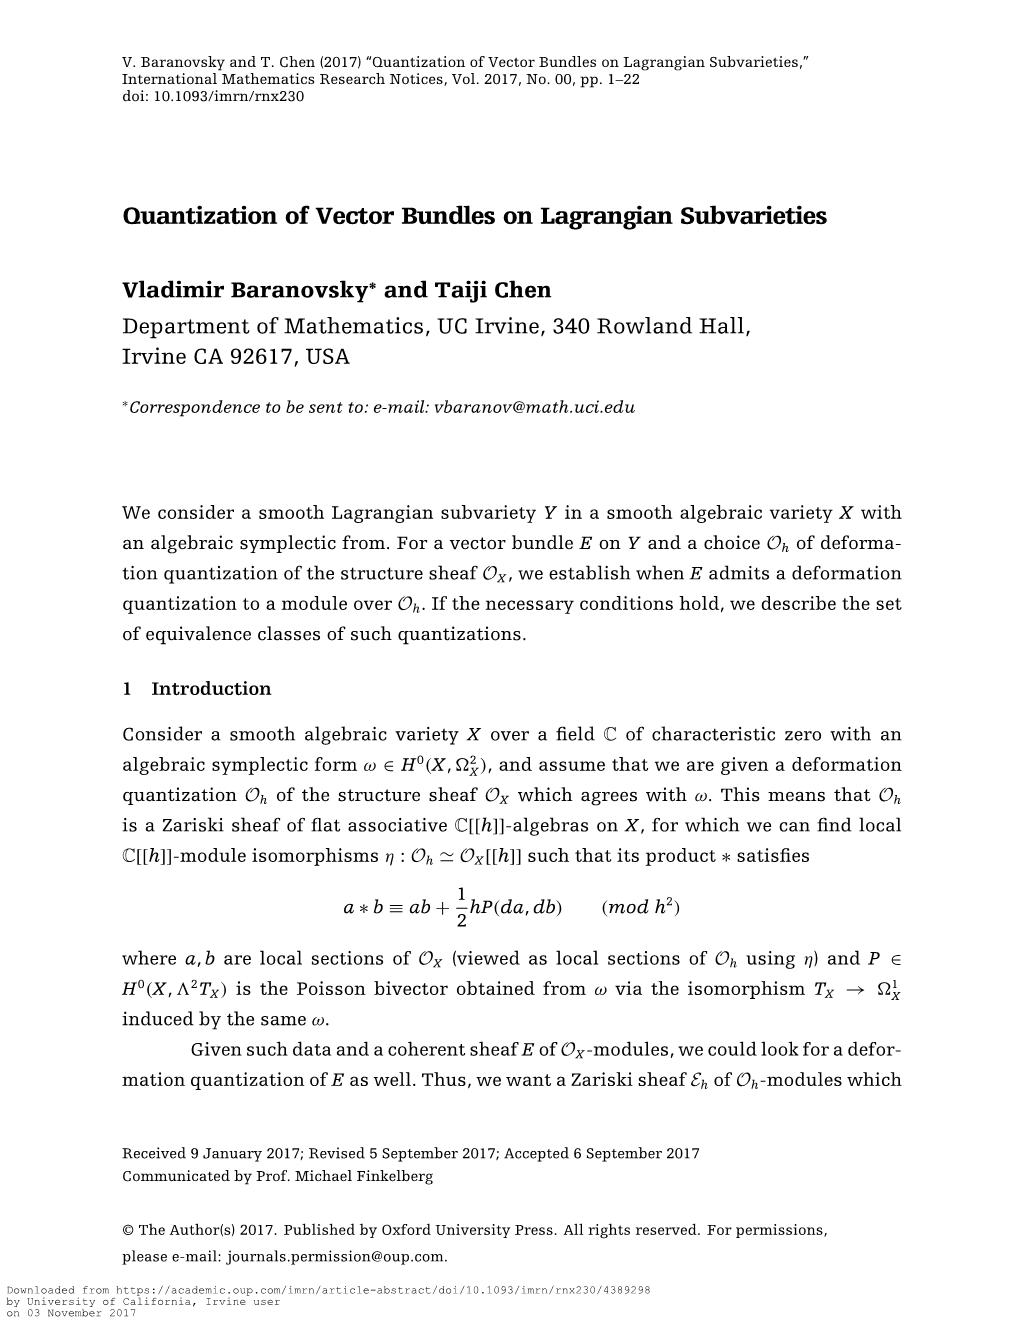 Quantization of Vector Bundles on Lagrangian Subvarieties,” International Mathematics Research Notices, Vol